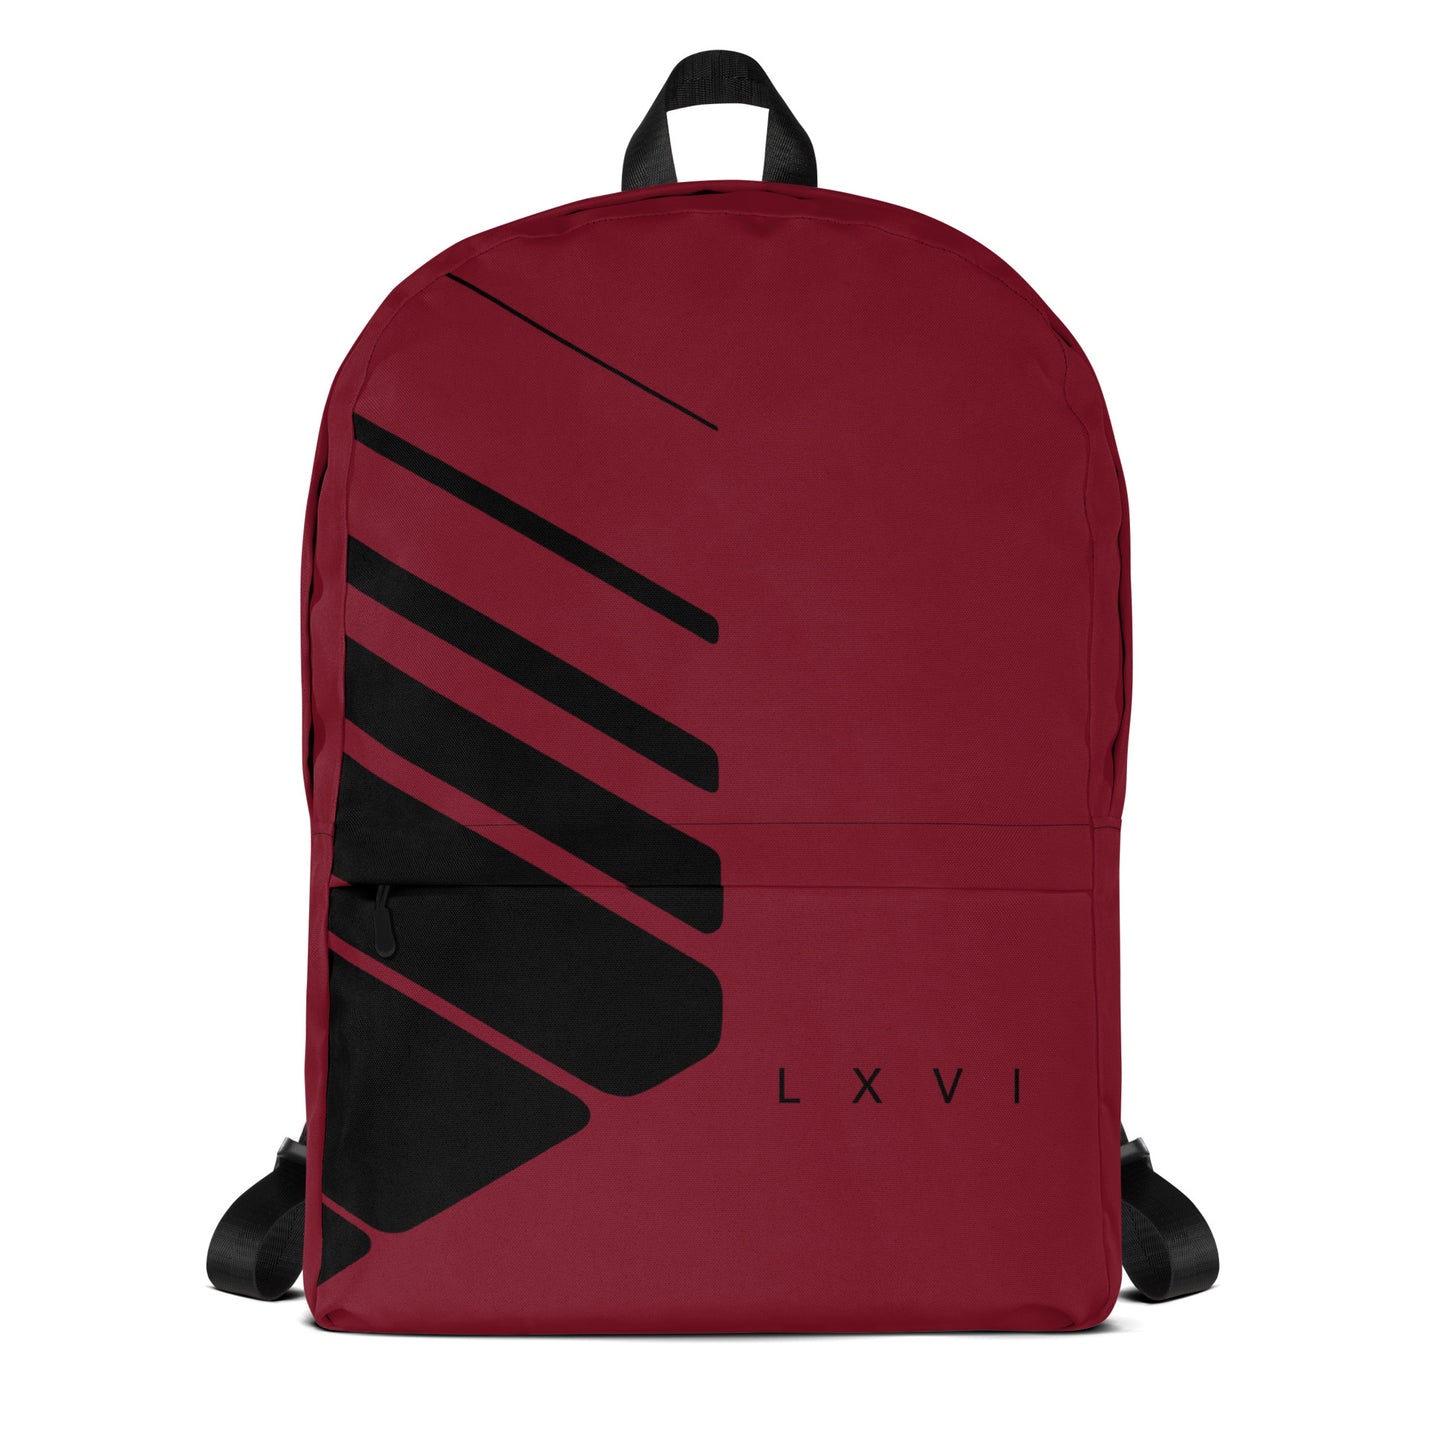 Earth Red L X V I Backpack